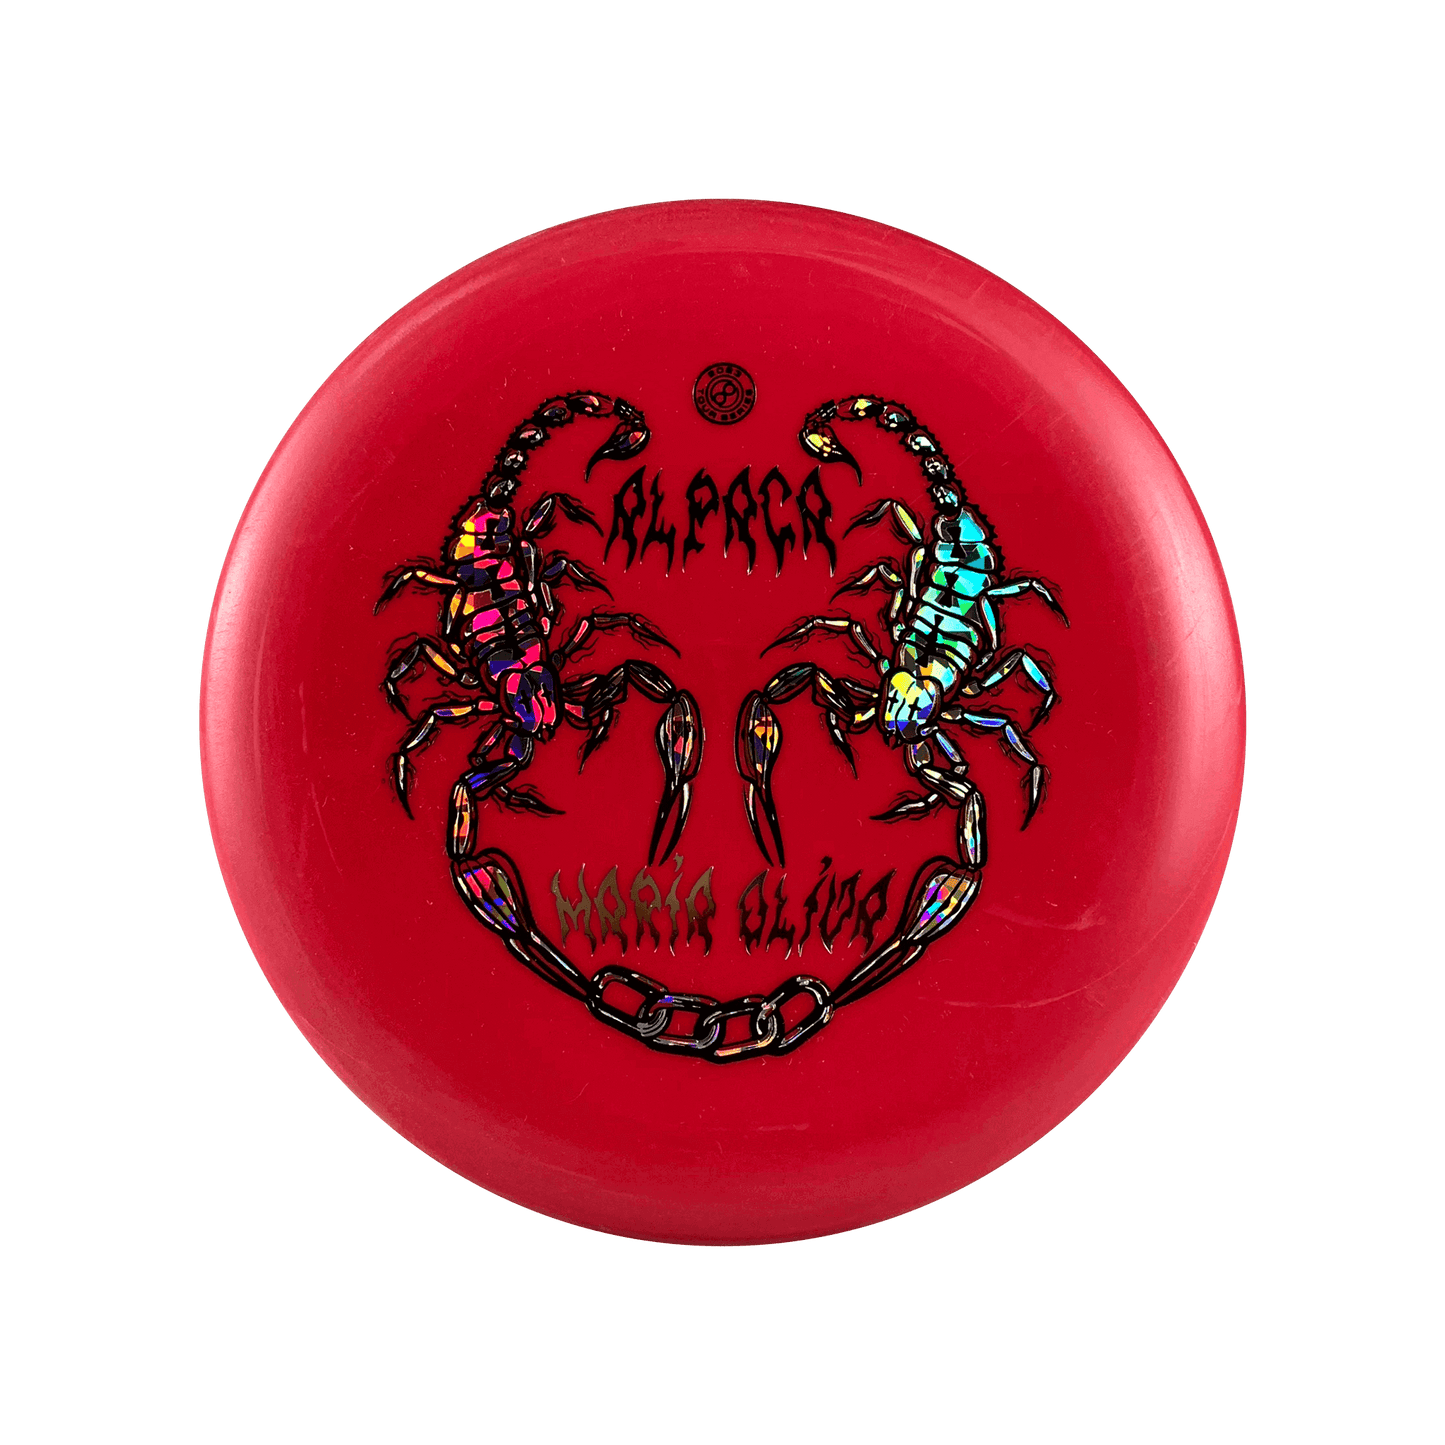 N-Blend Alpaca - Maria Oliva Tour Series 2023 Disc Infinite Discs red 175 